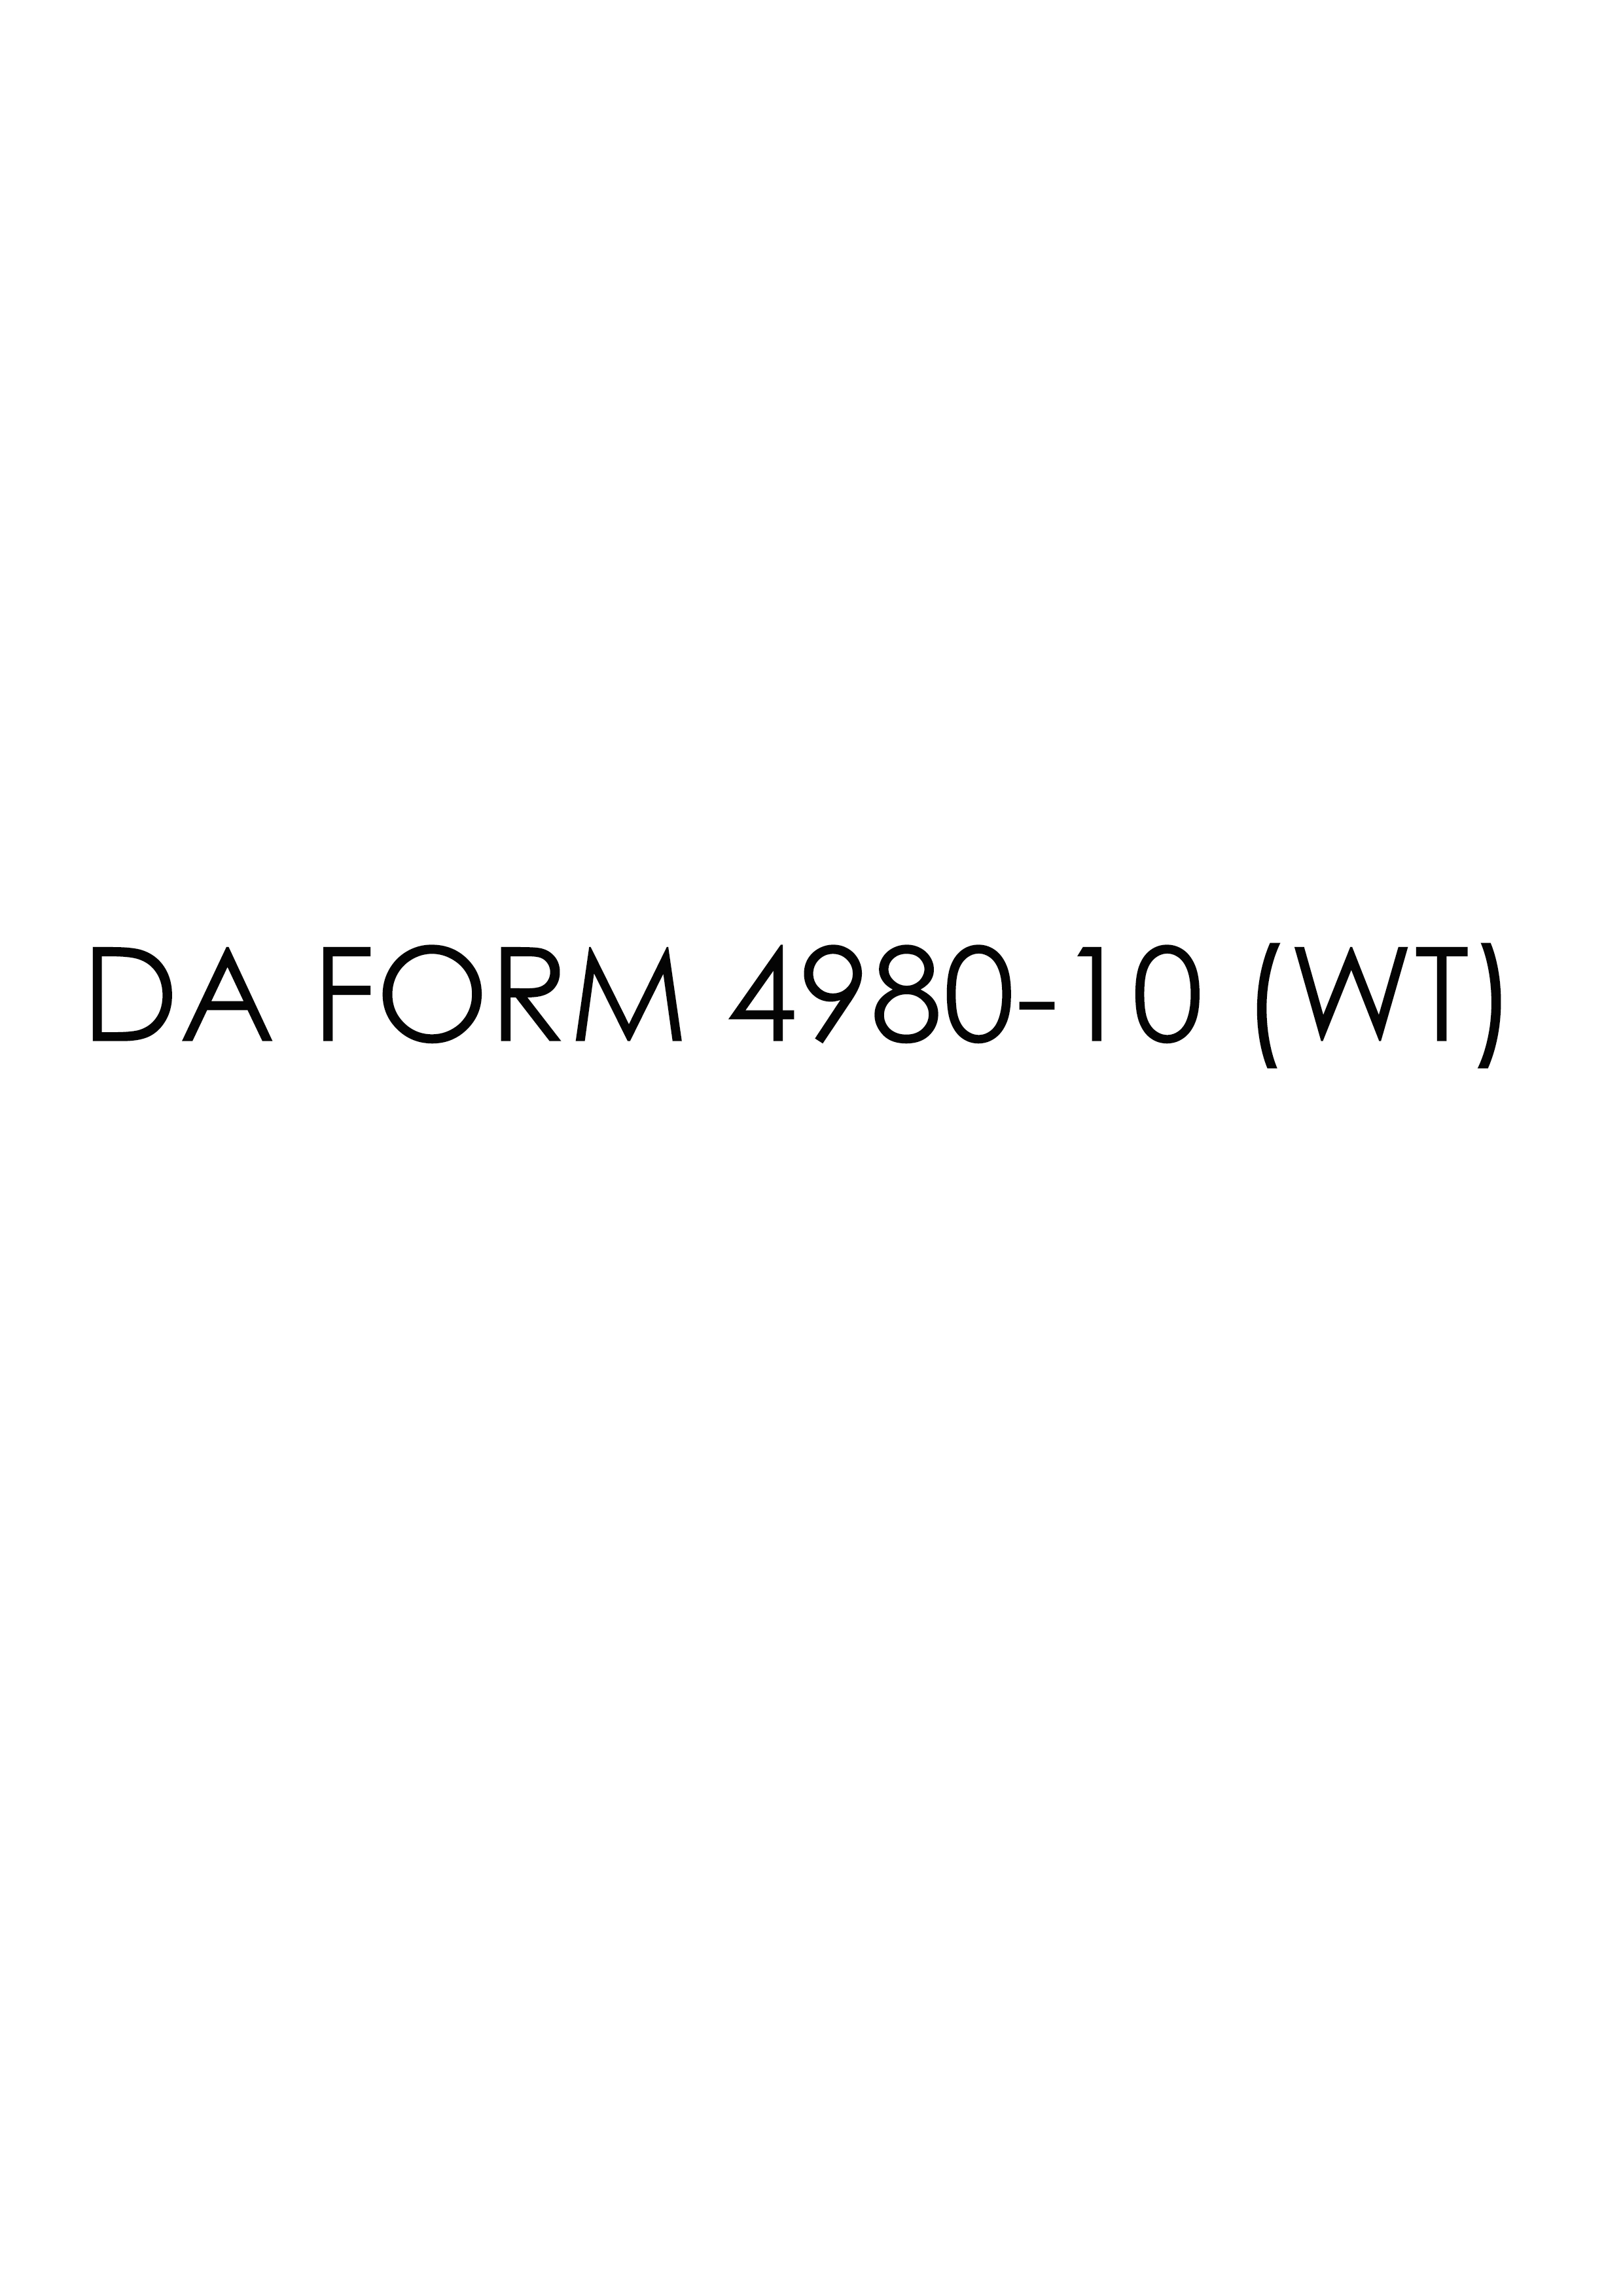 da Form 4980-10 (WT) fillable